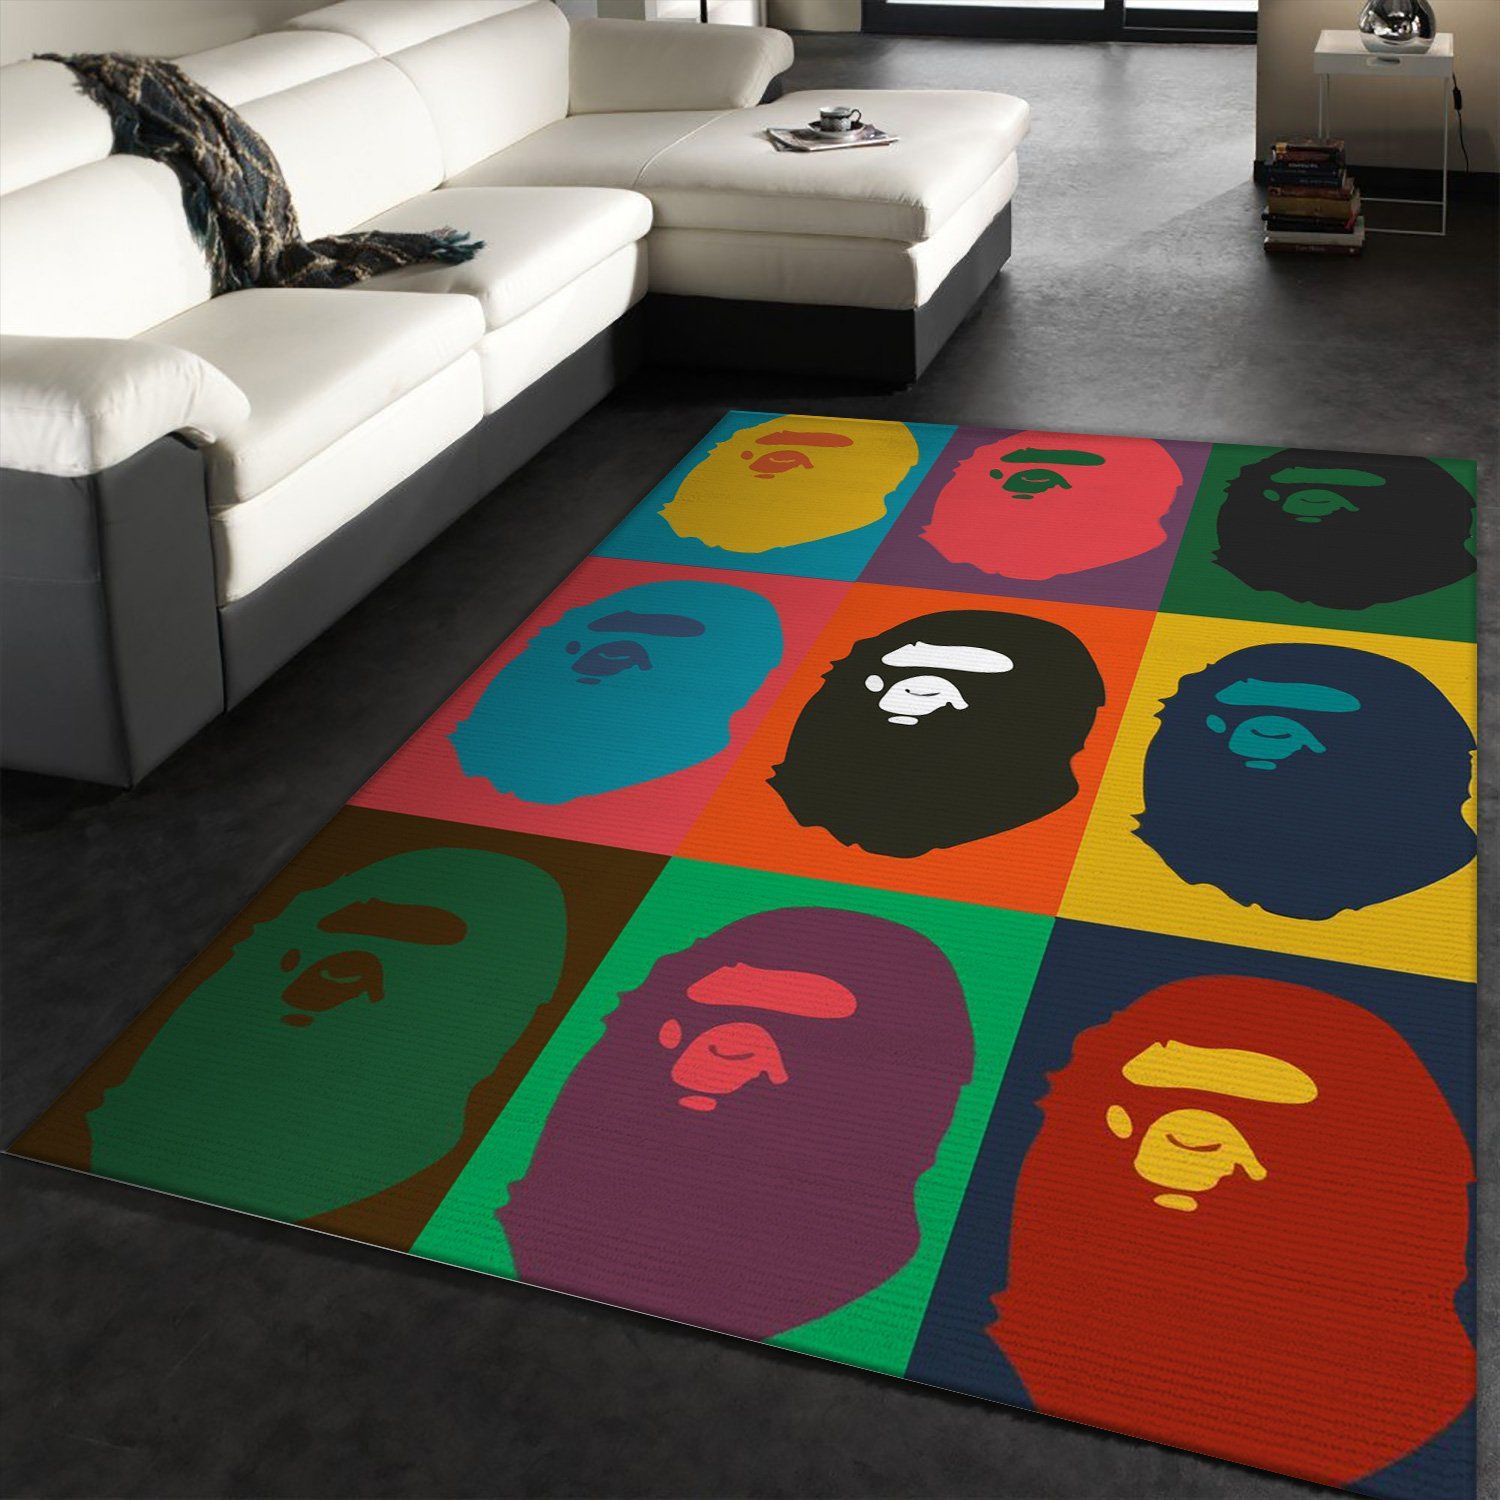 Japanese Fashion bape Series pattern carpet animation trend Ape head rug  Children's room or Large area yoga mat in living room